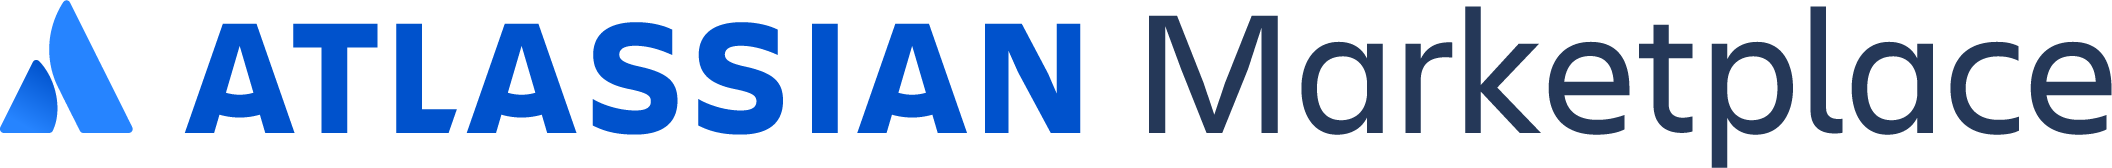 Atlassian Marketplace Logo